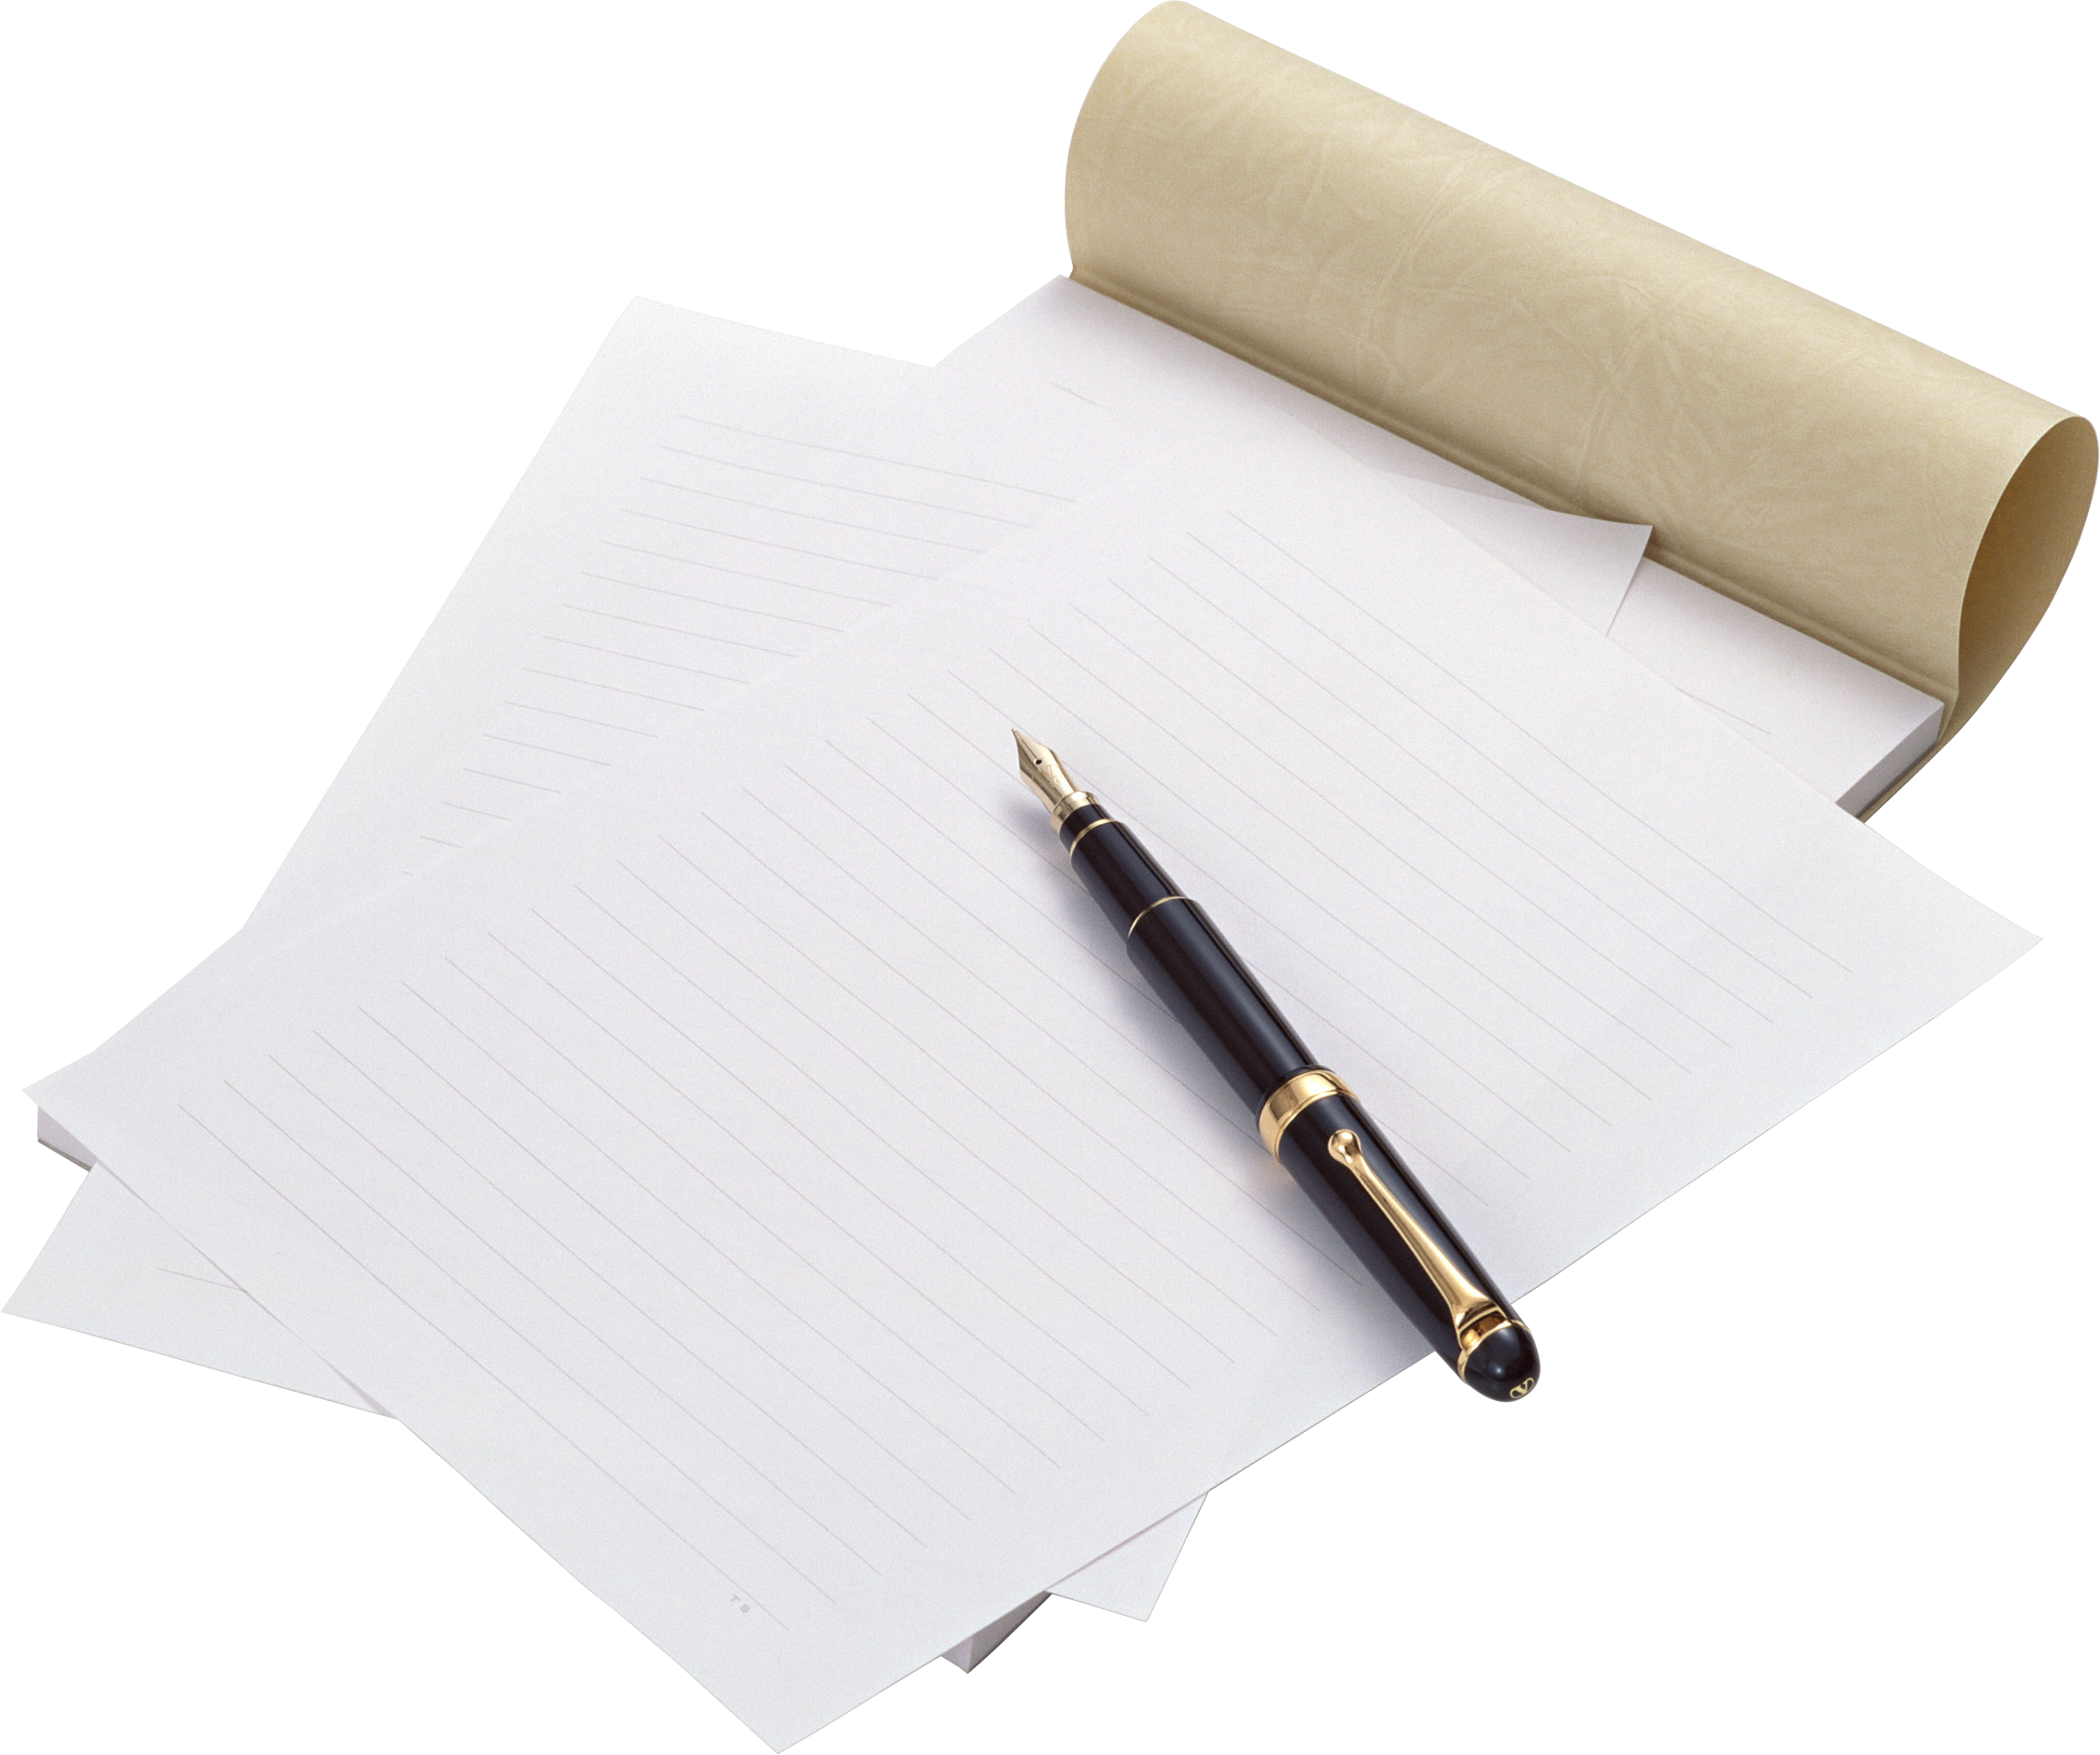 Ручка и бумага. Лист бумаги. Лист бумаги и ручка. Ручка и листок бумаги. Sheet of paper